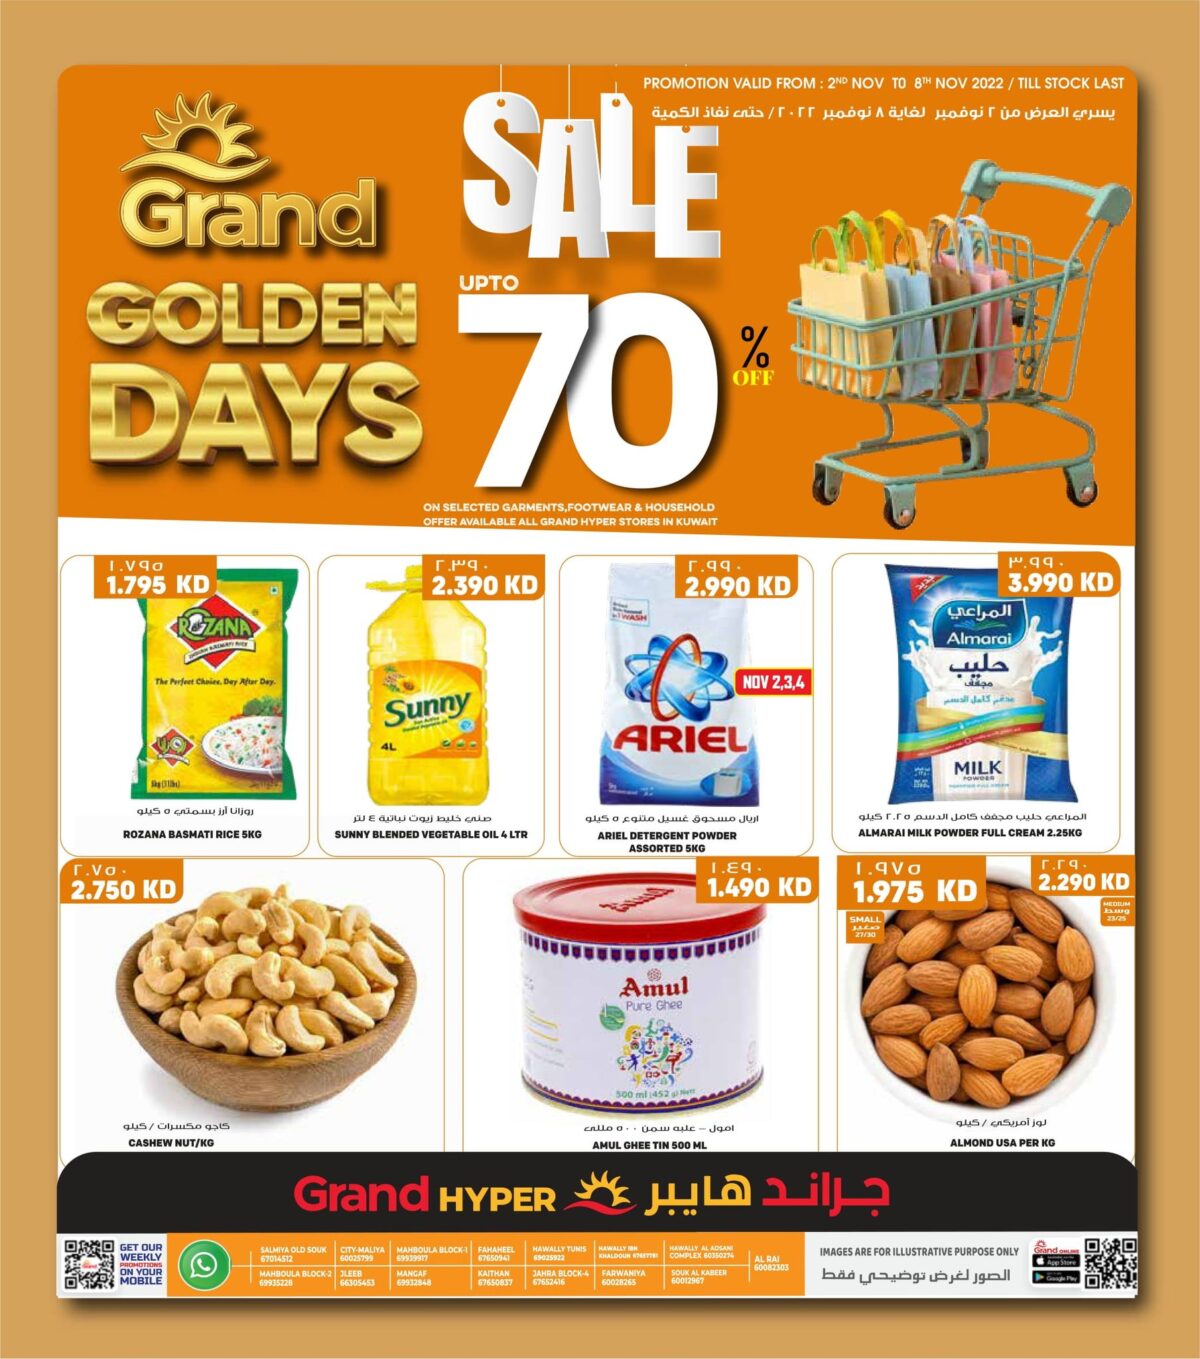 Grand Hypermarket Gold offers 70% Promotions in Grand Golden Days November 2022 1